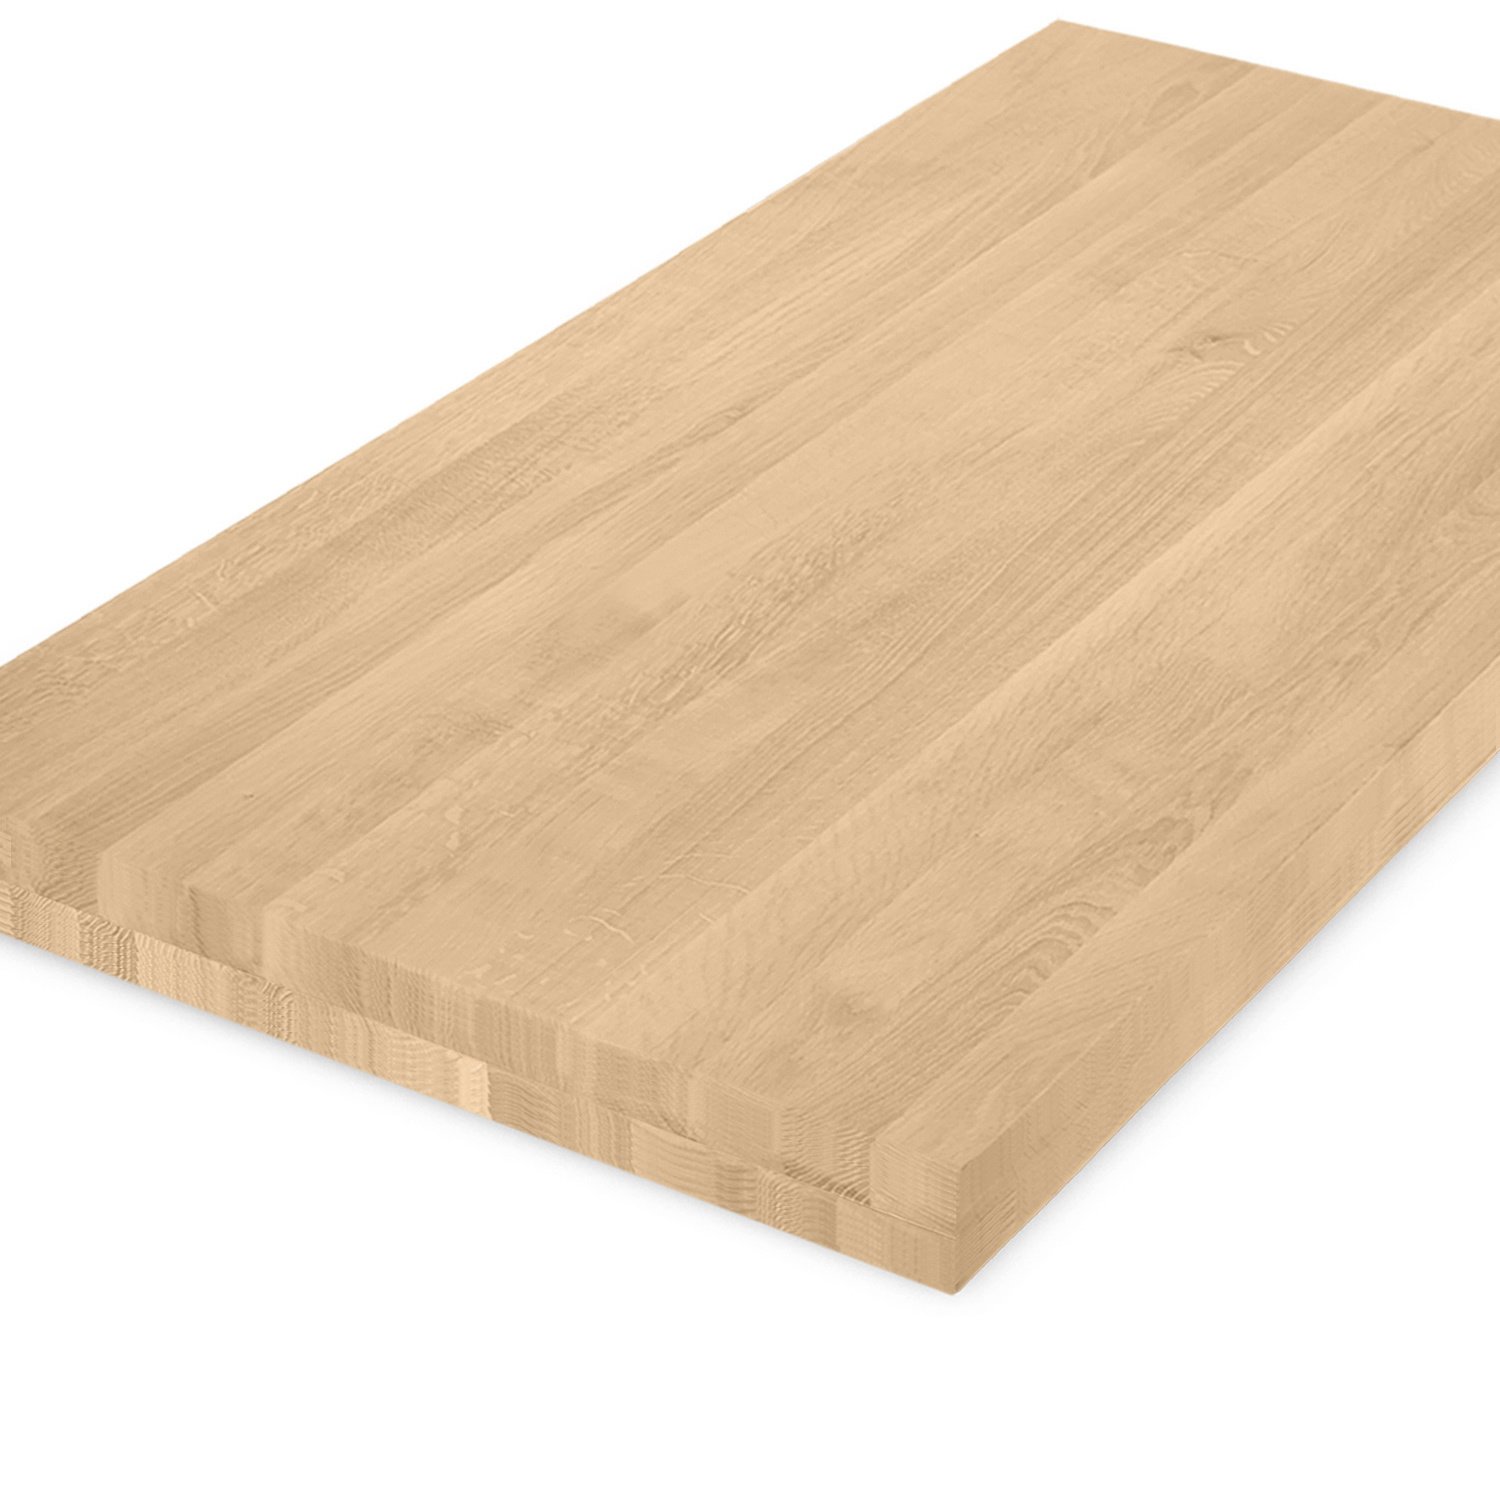  Eiken tafelblad op maat - 8 cm dik (2-laags) - foutvrij Europees eikenhout - verlijmd kd 8-12% - 50-120x50-350 cm